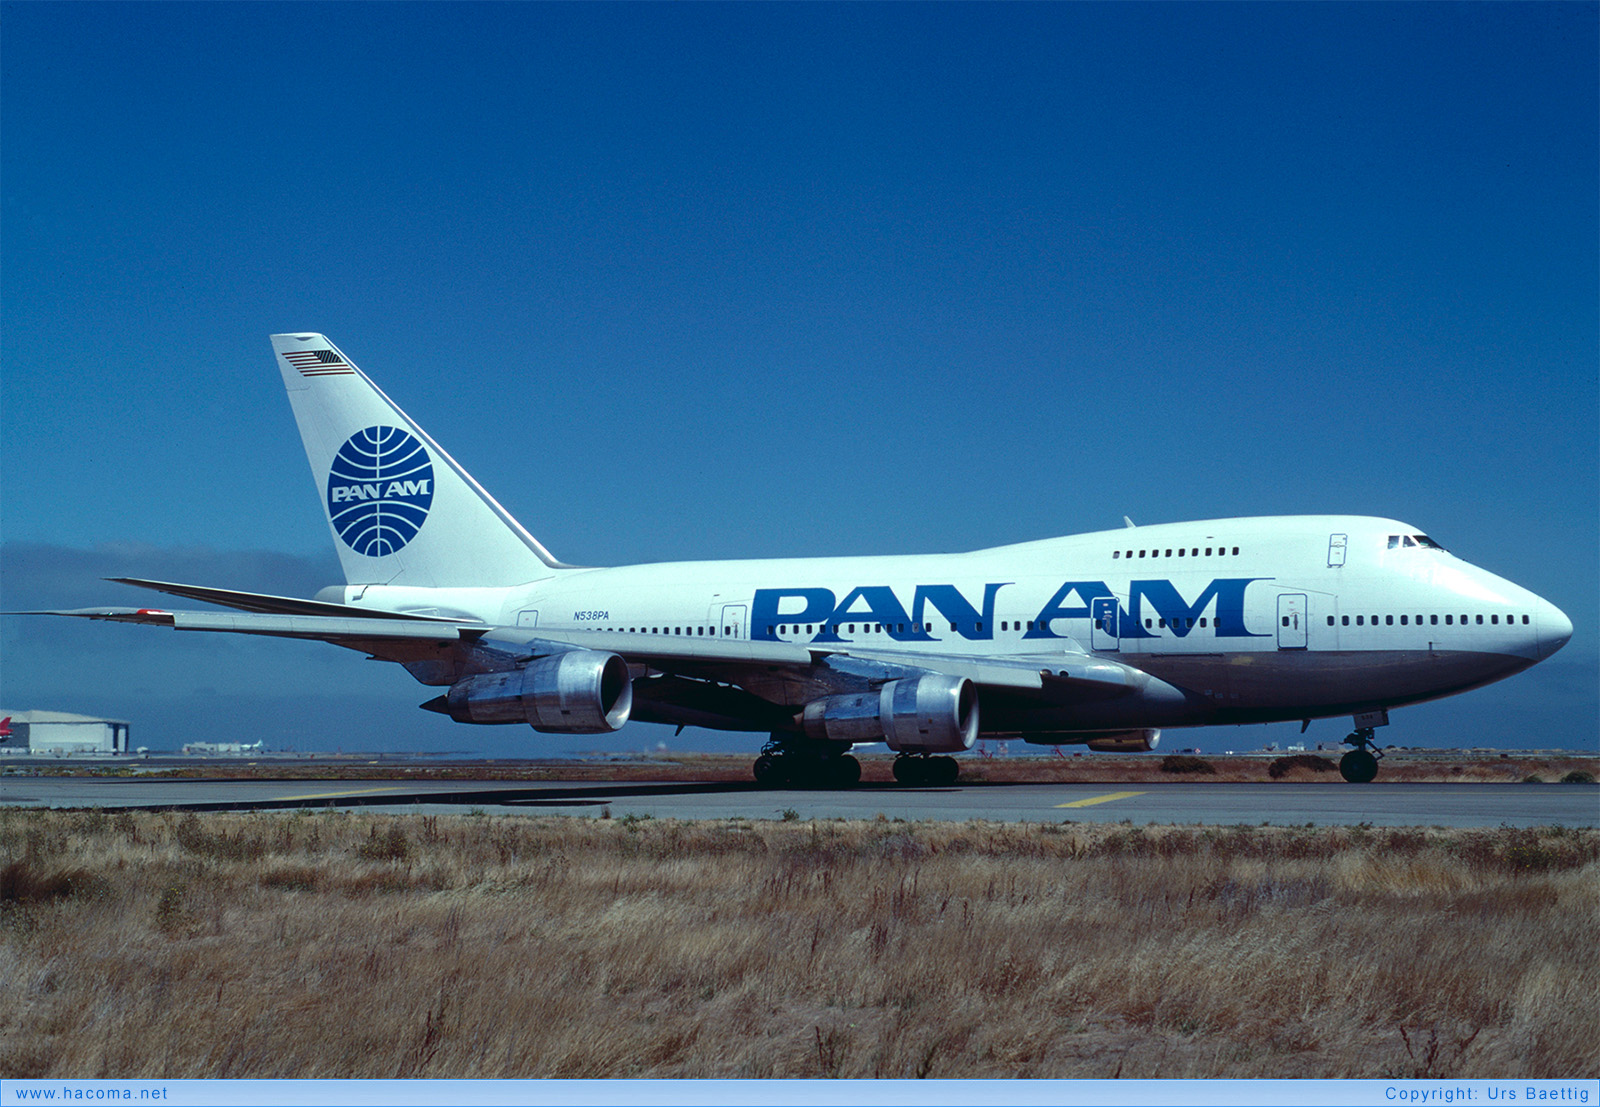 Foto von N538PA - Pan Am Clipper Fleetwing / Plymouth Rock / Princess Grace - San Francisco International Airport